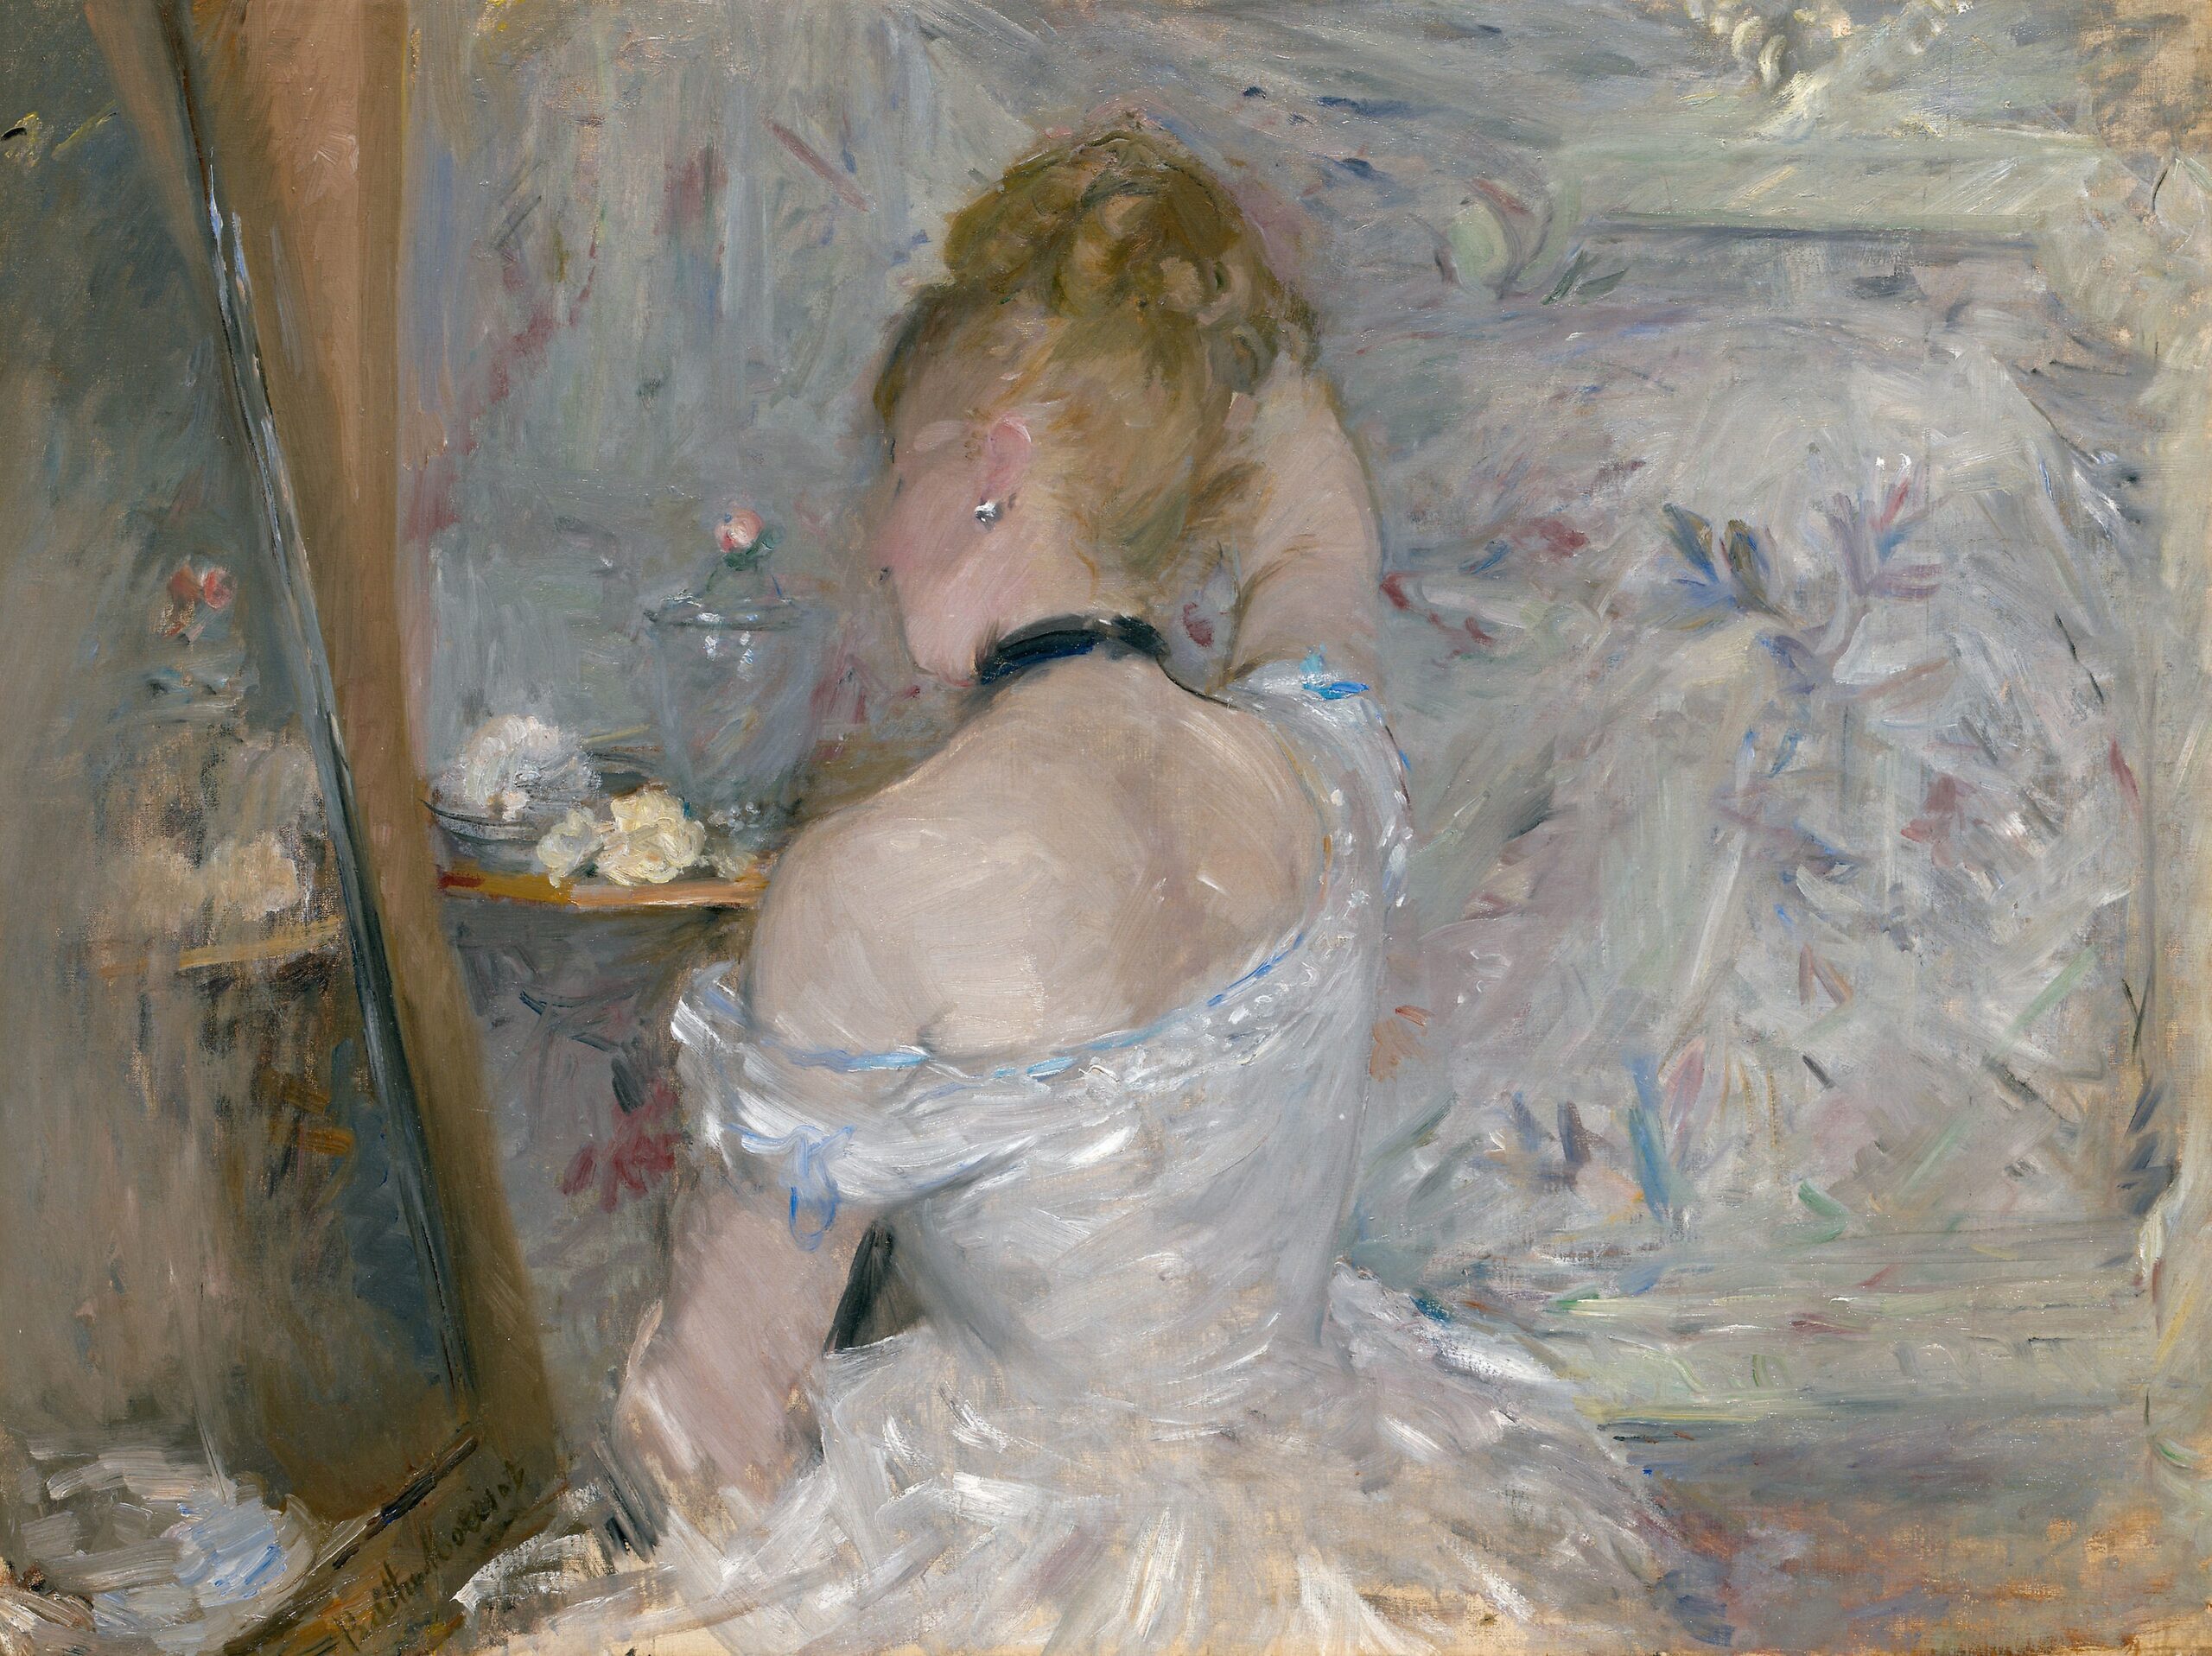 "Impression", Berthe Morisot